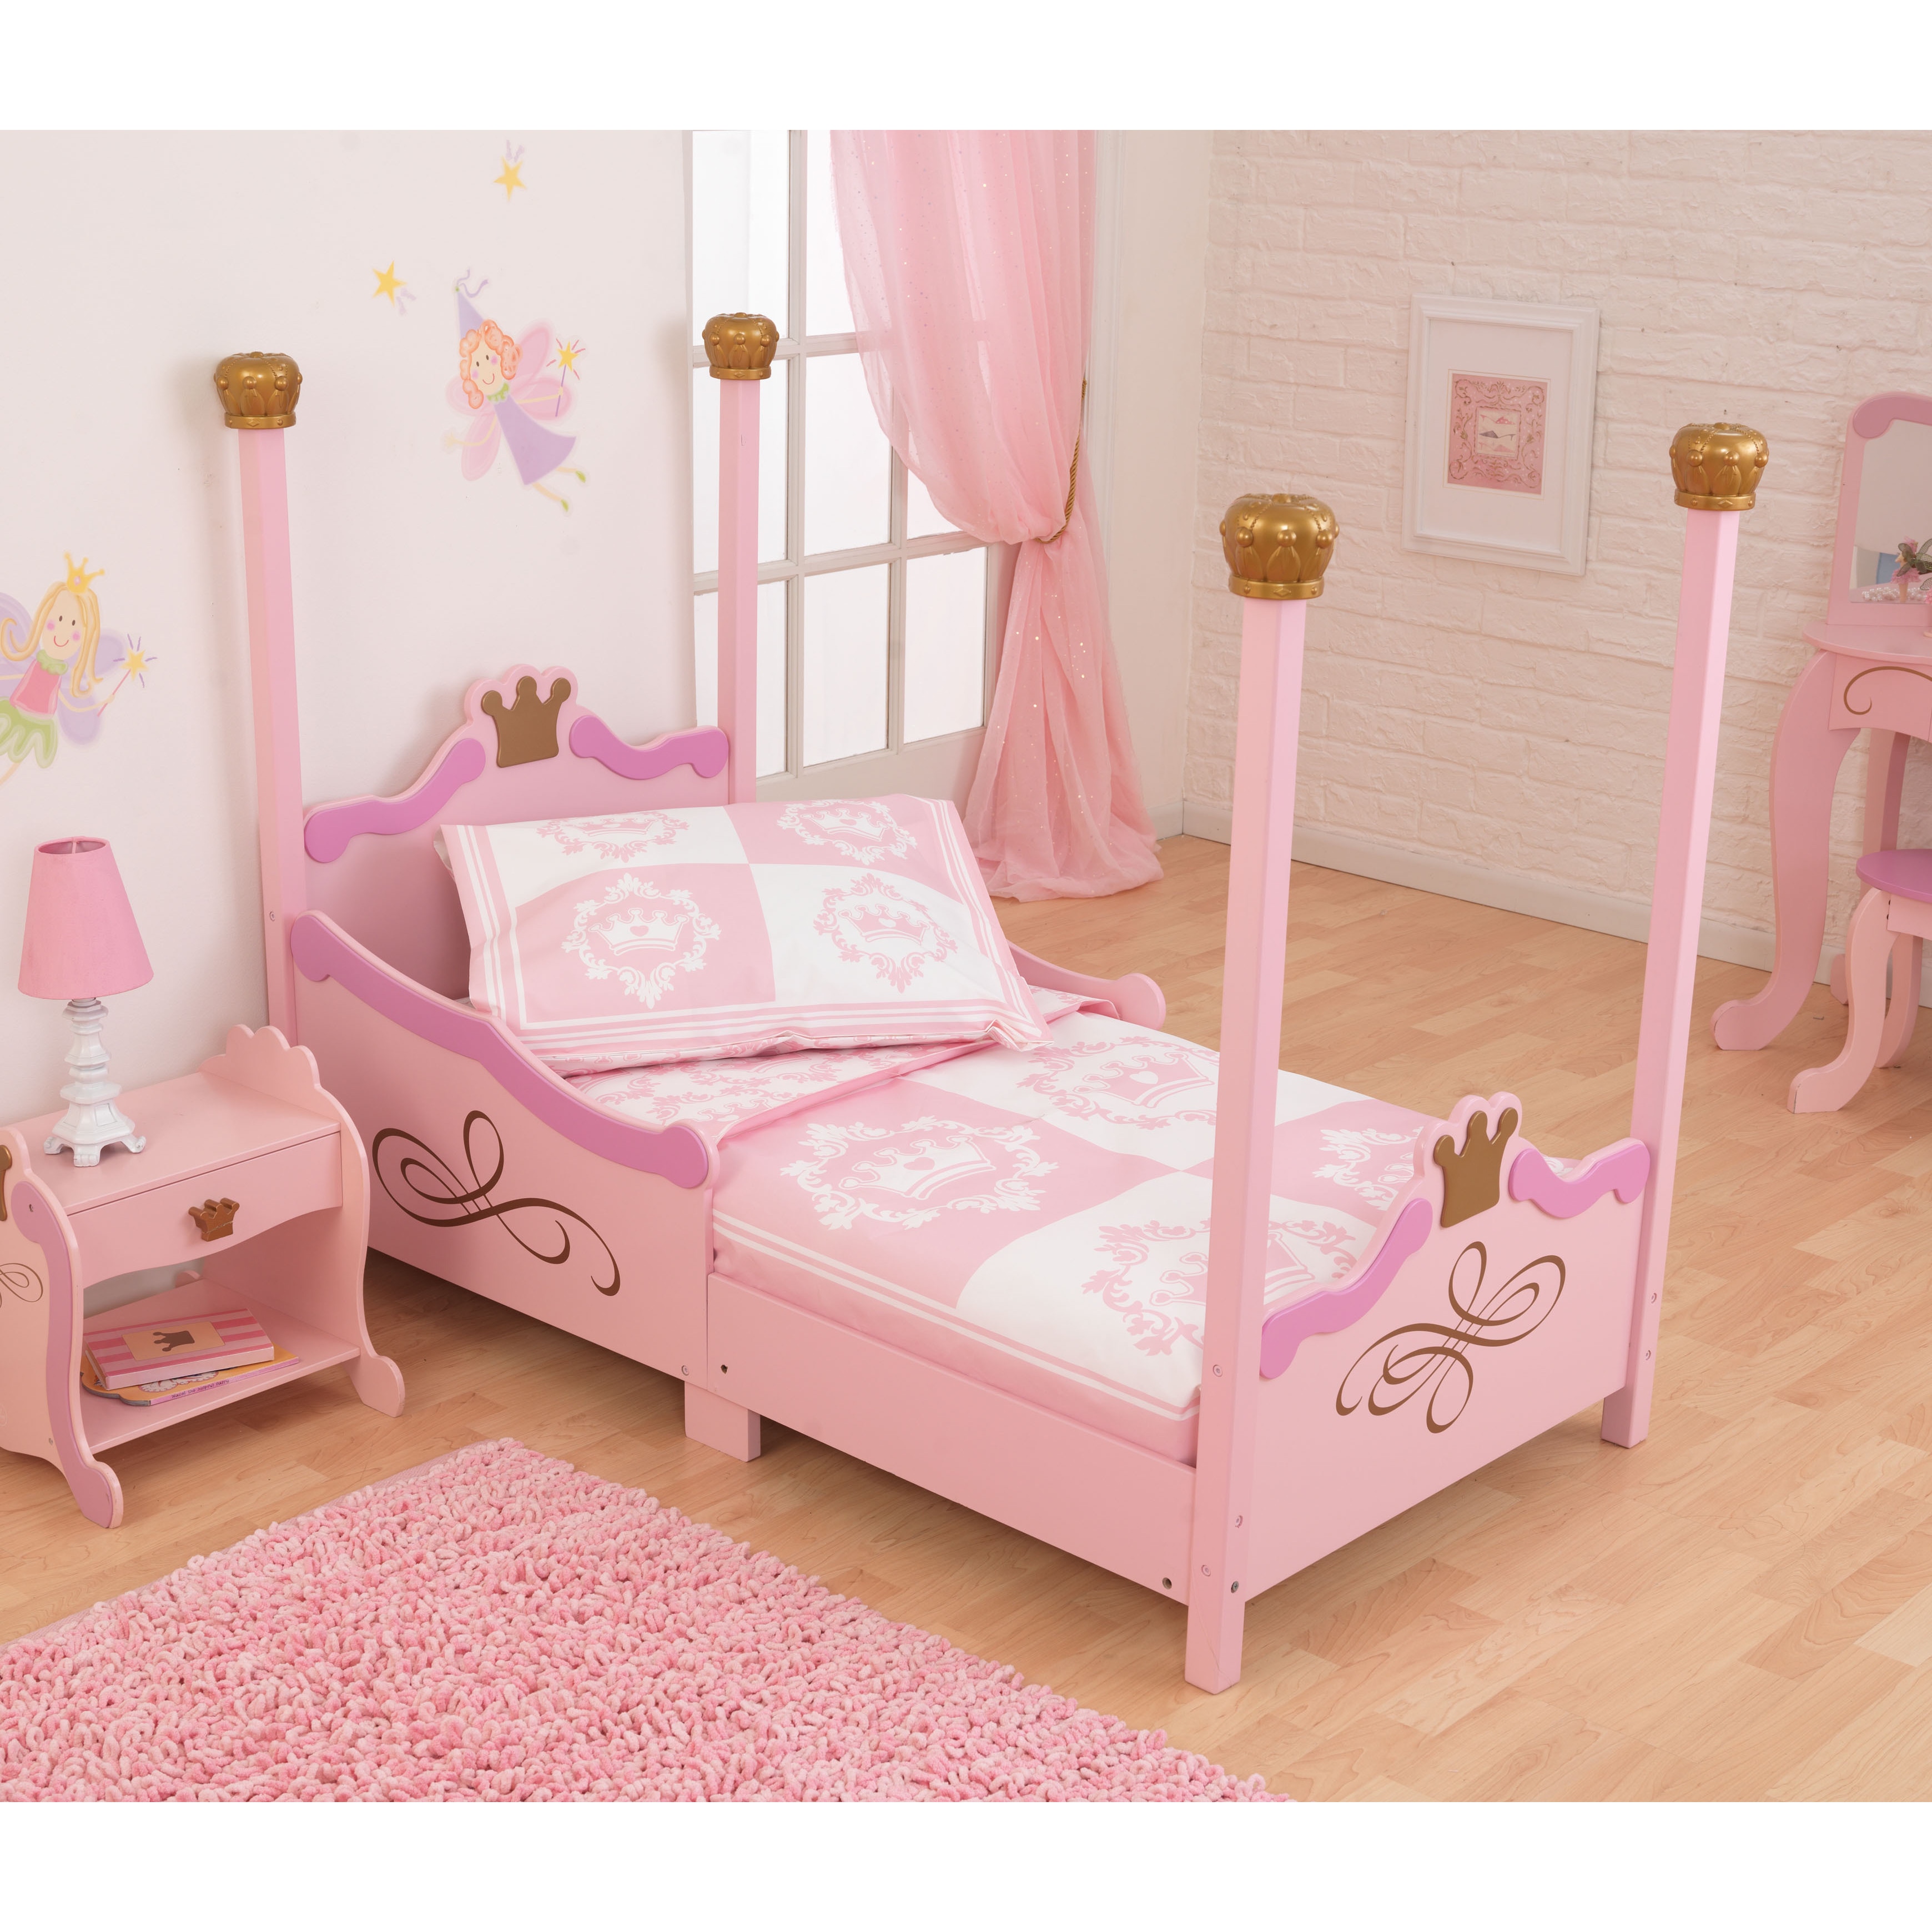 princess bedroom set for toddlers